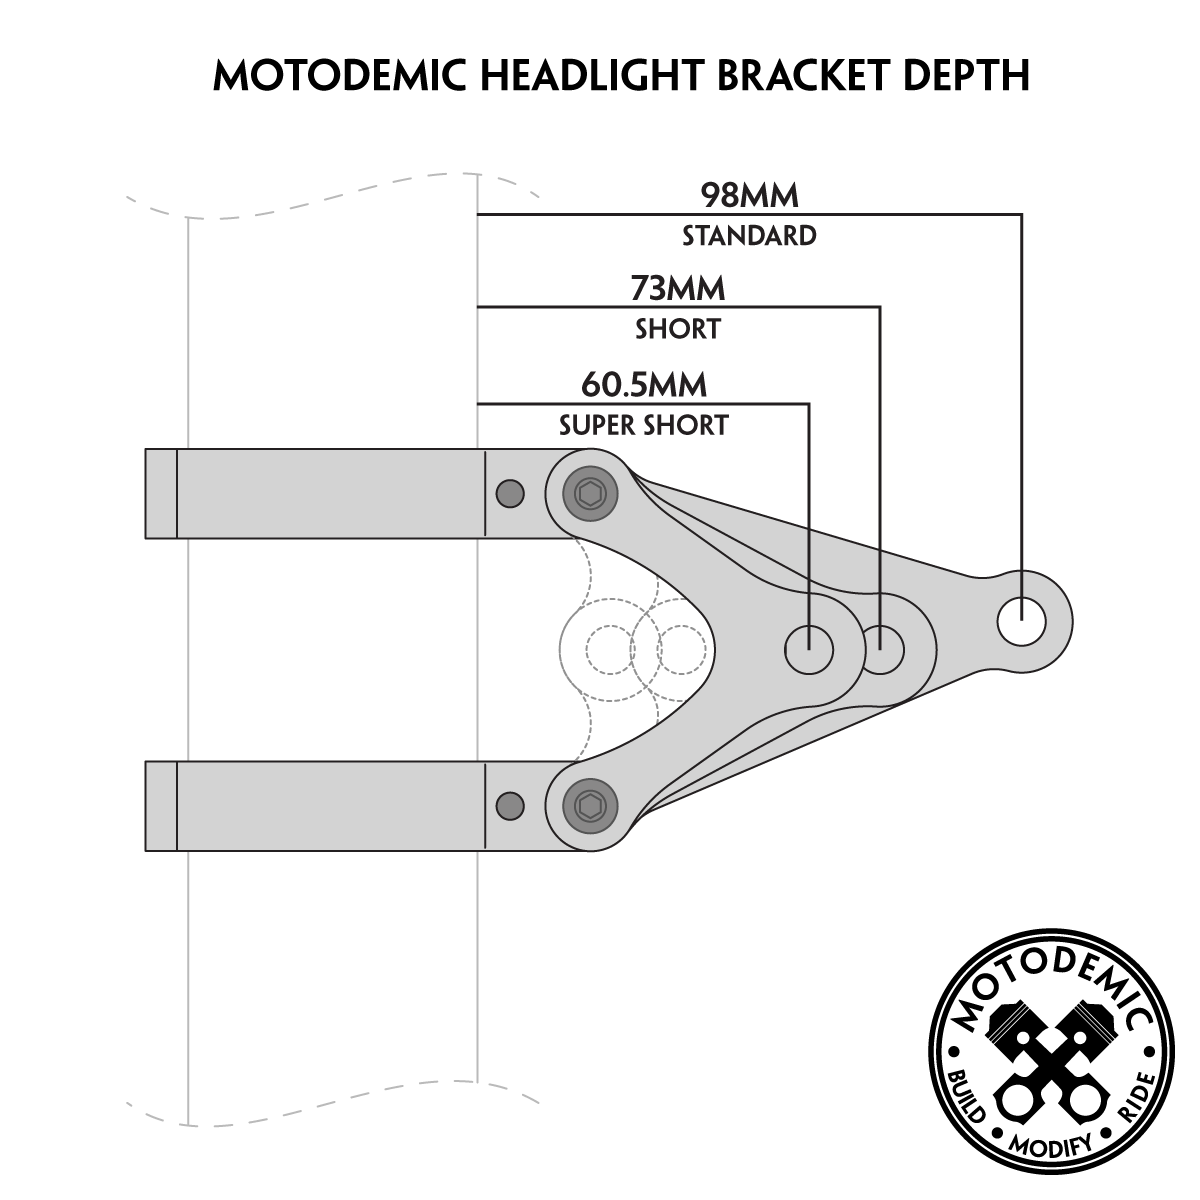 47mm MOTODEMIC Headlight Brackets